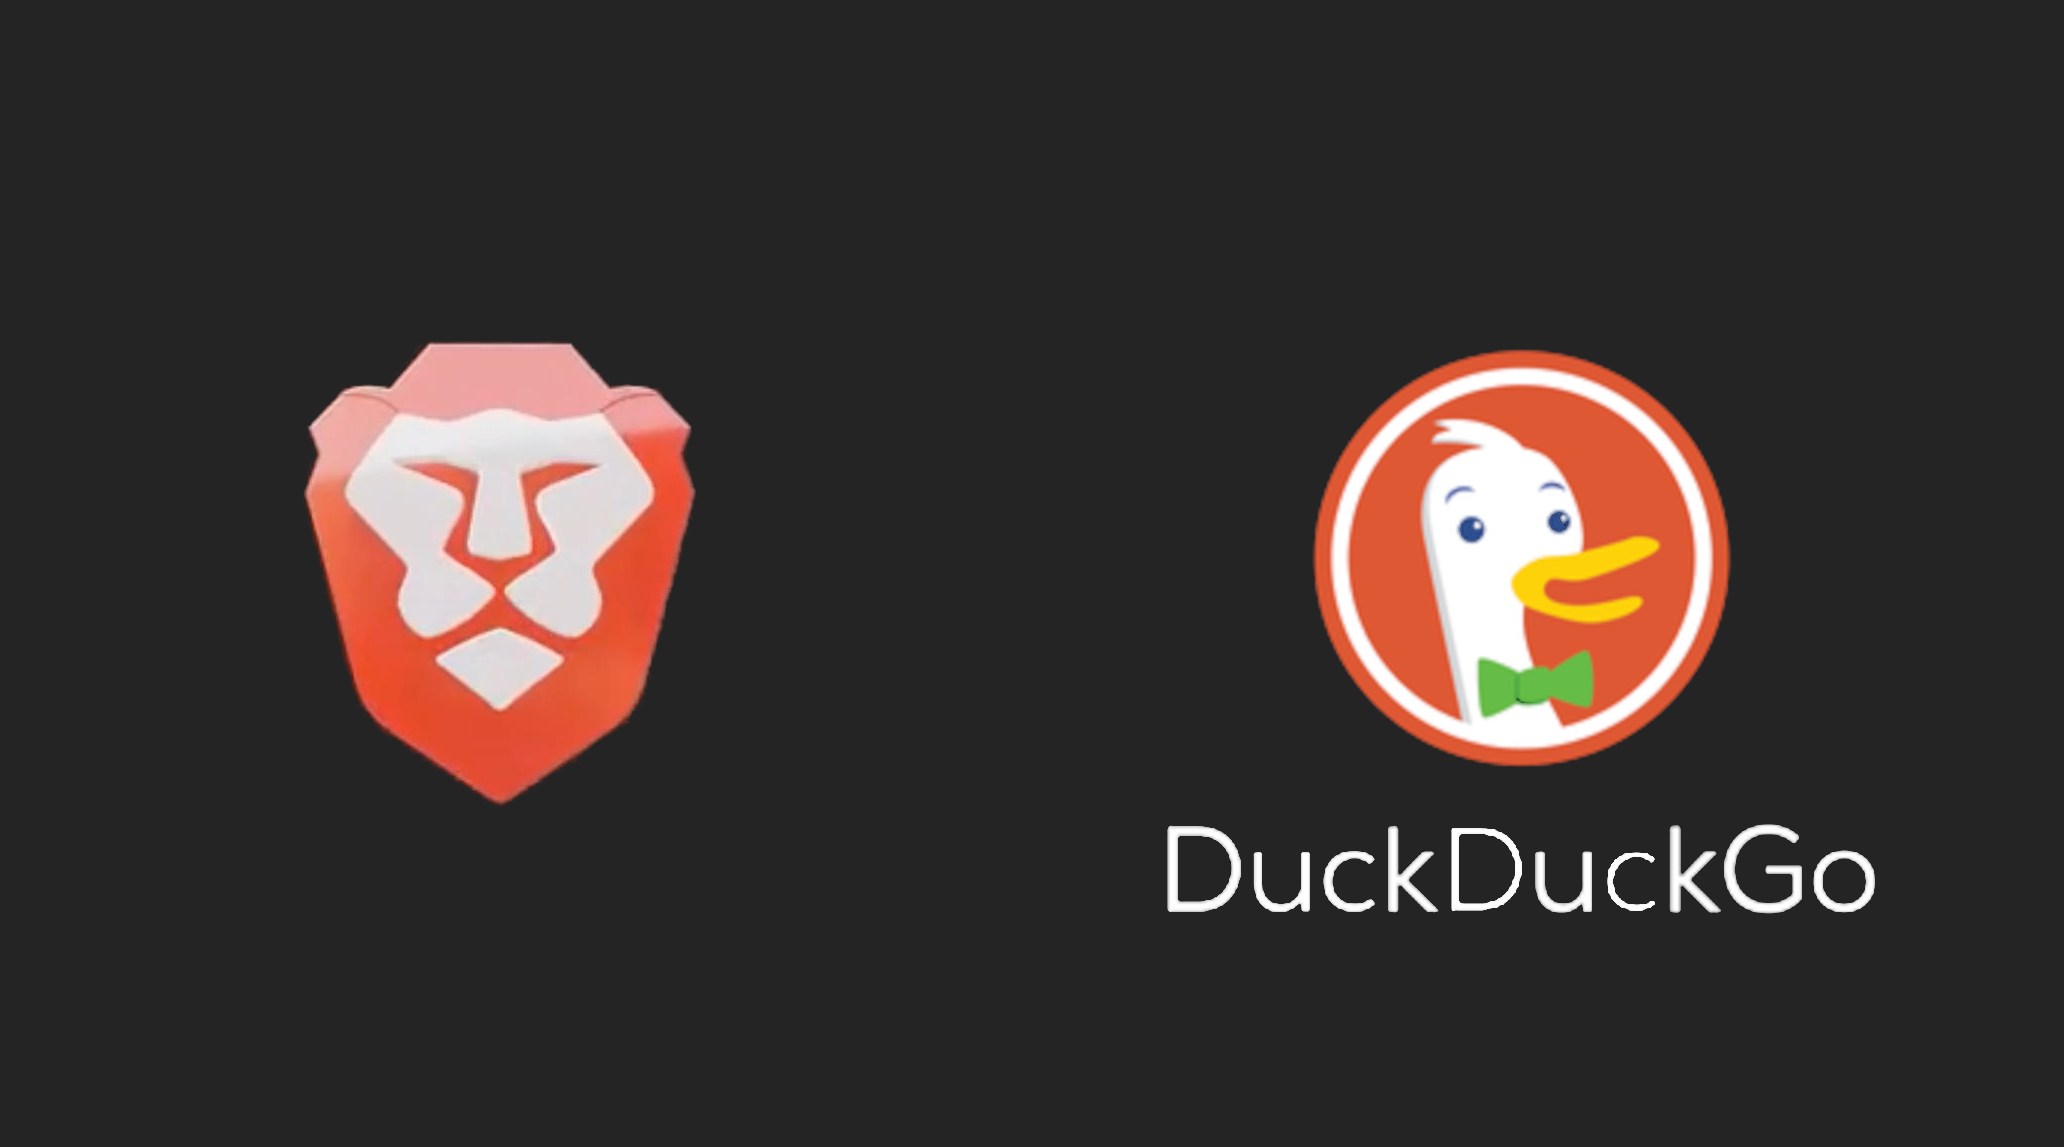 Brave and DuckDuckGo